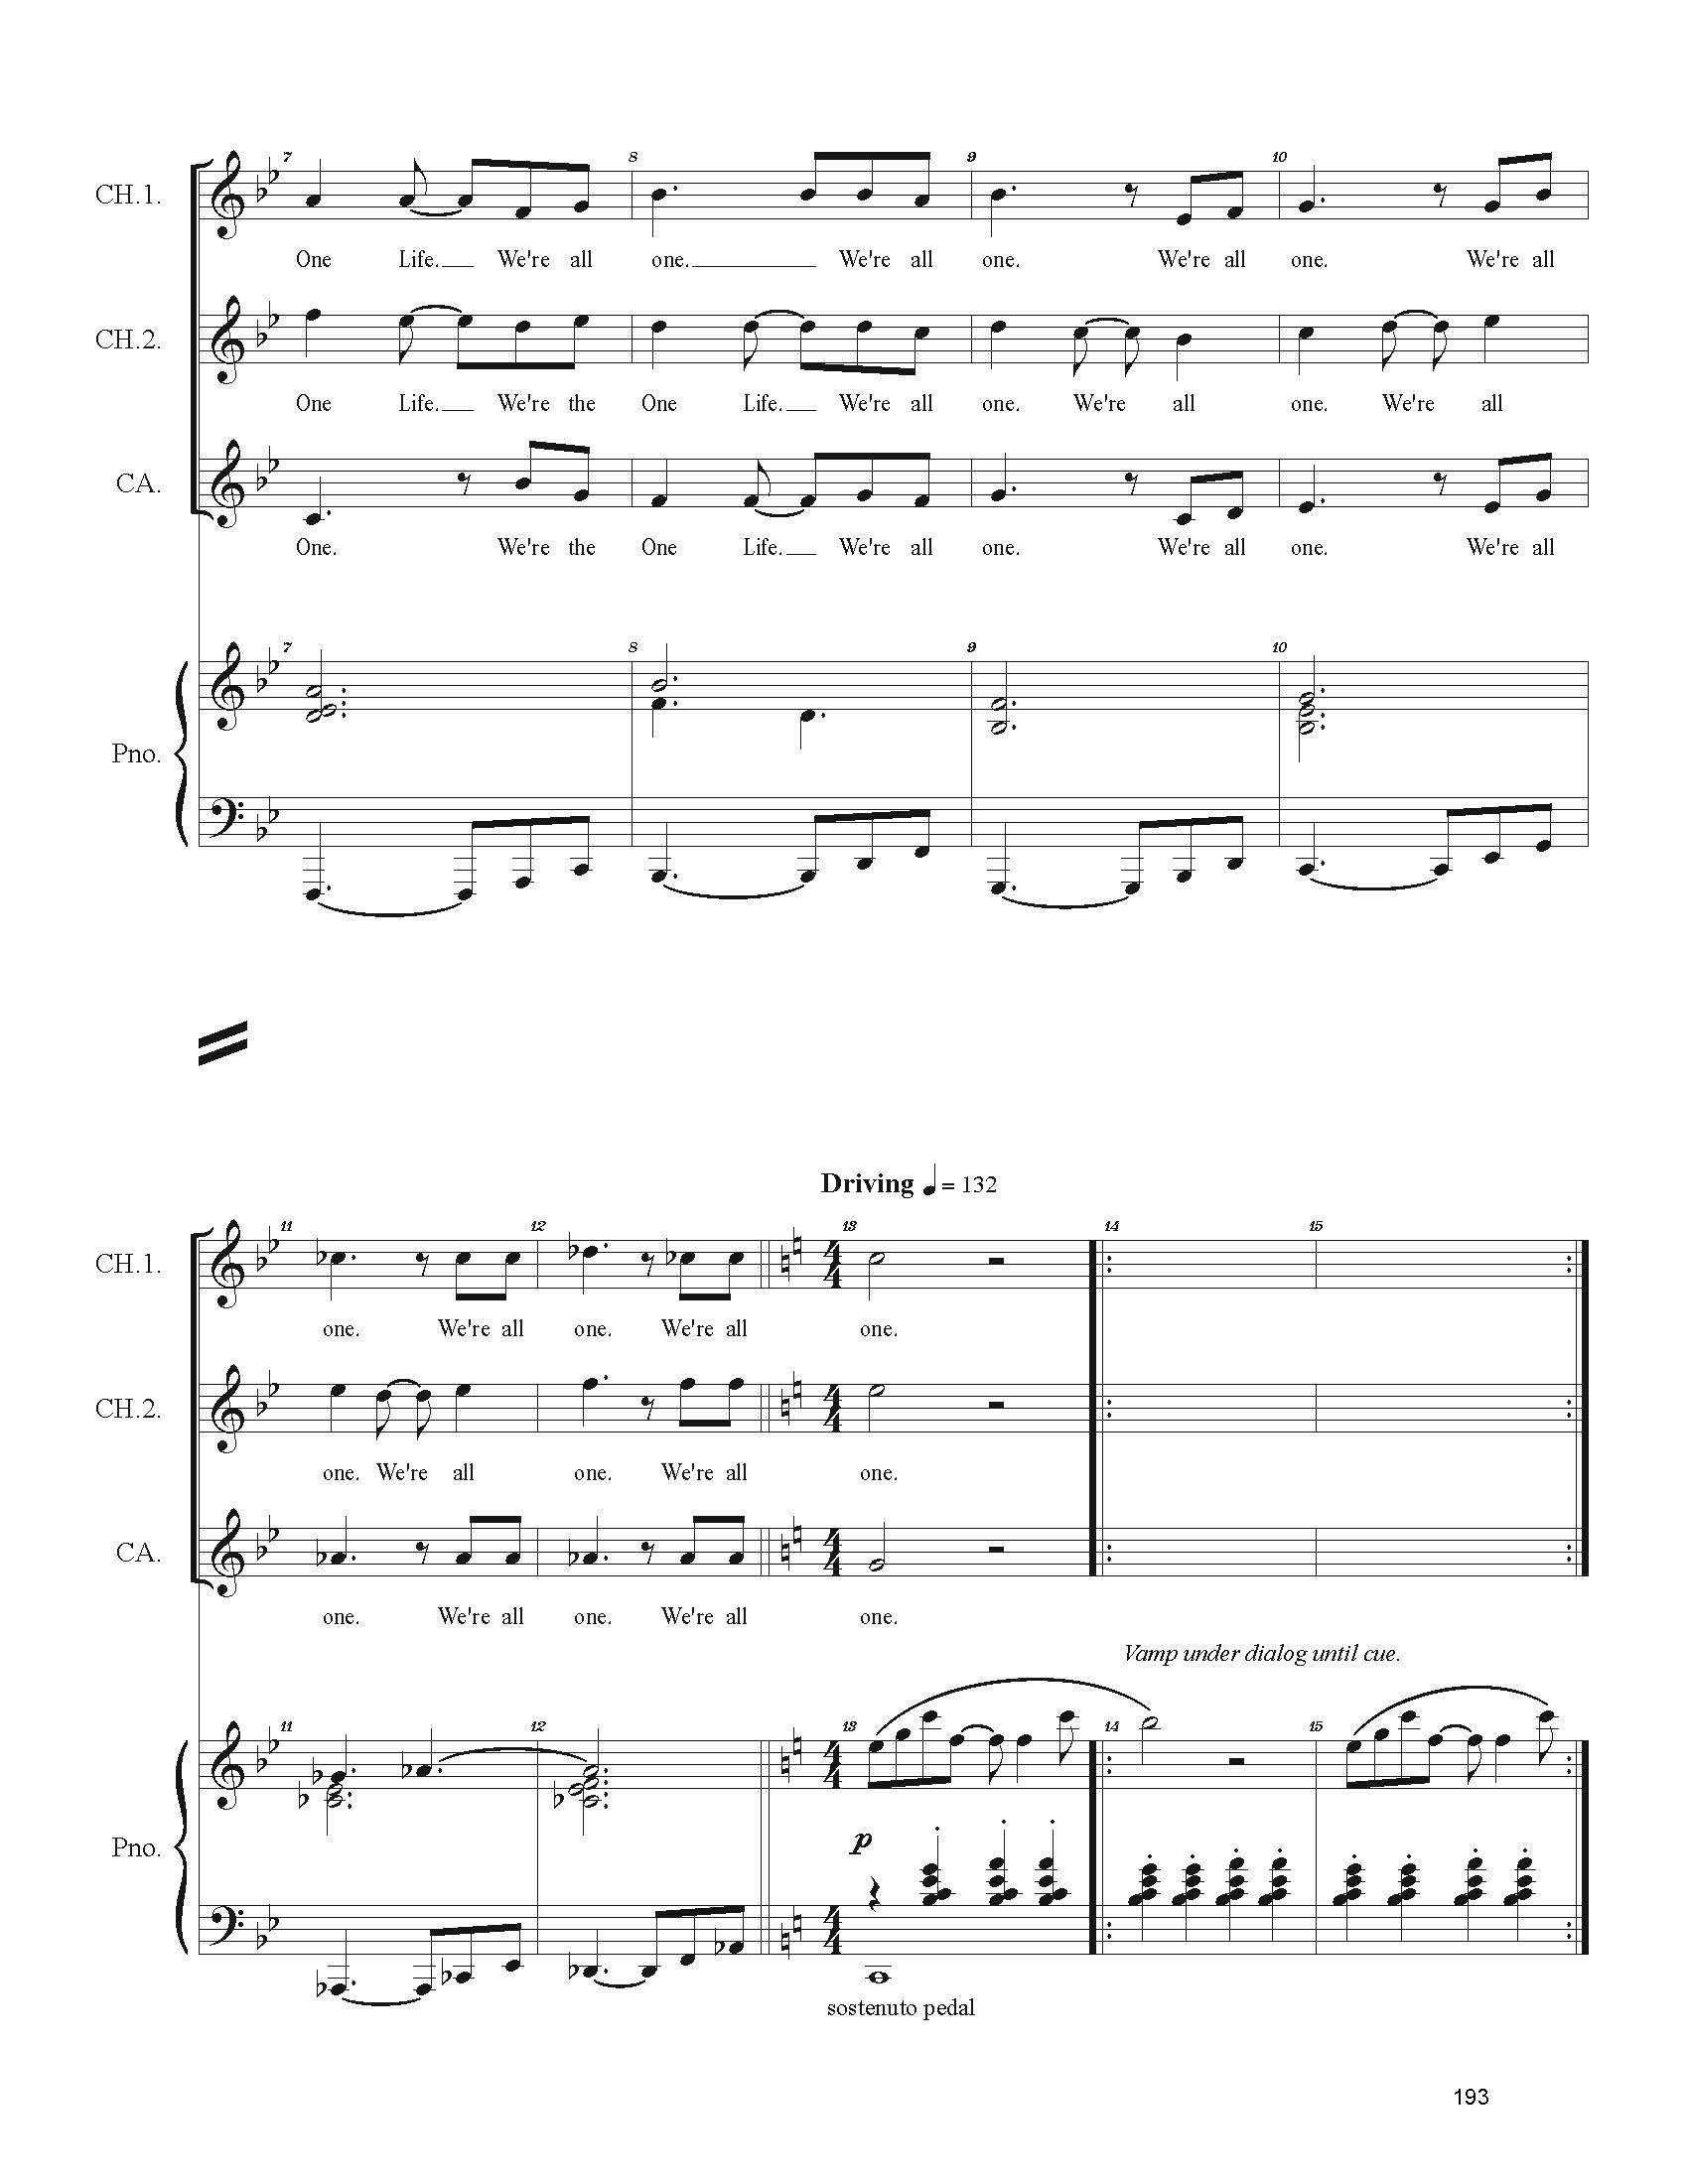 FULL PIANO VOCAL SCORE DRAFT 1 - Score_Page_193.jpg